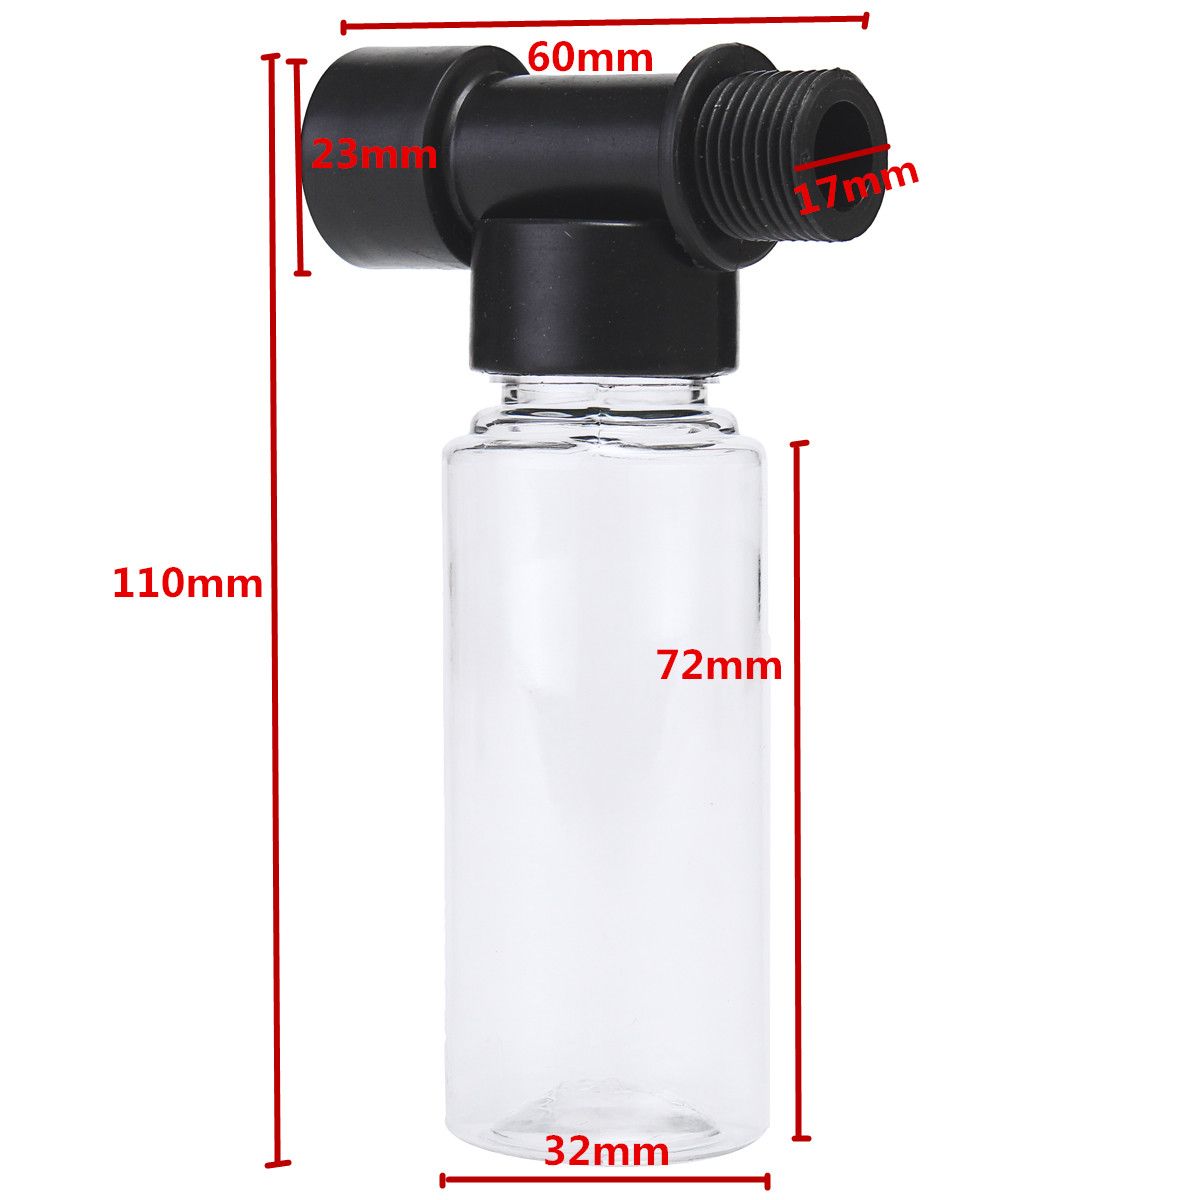 60mL-Bubble-Pot-Car-Wash-High-Pressure-Power-Washer-Sprayer-Spray-Nozzle-Gun-Bottle-1216559